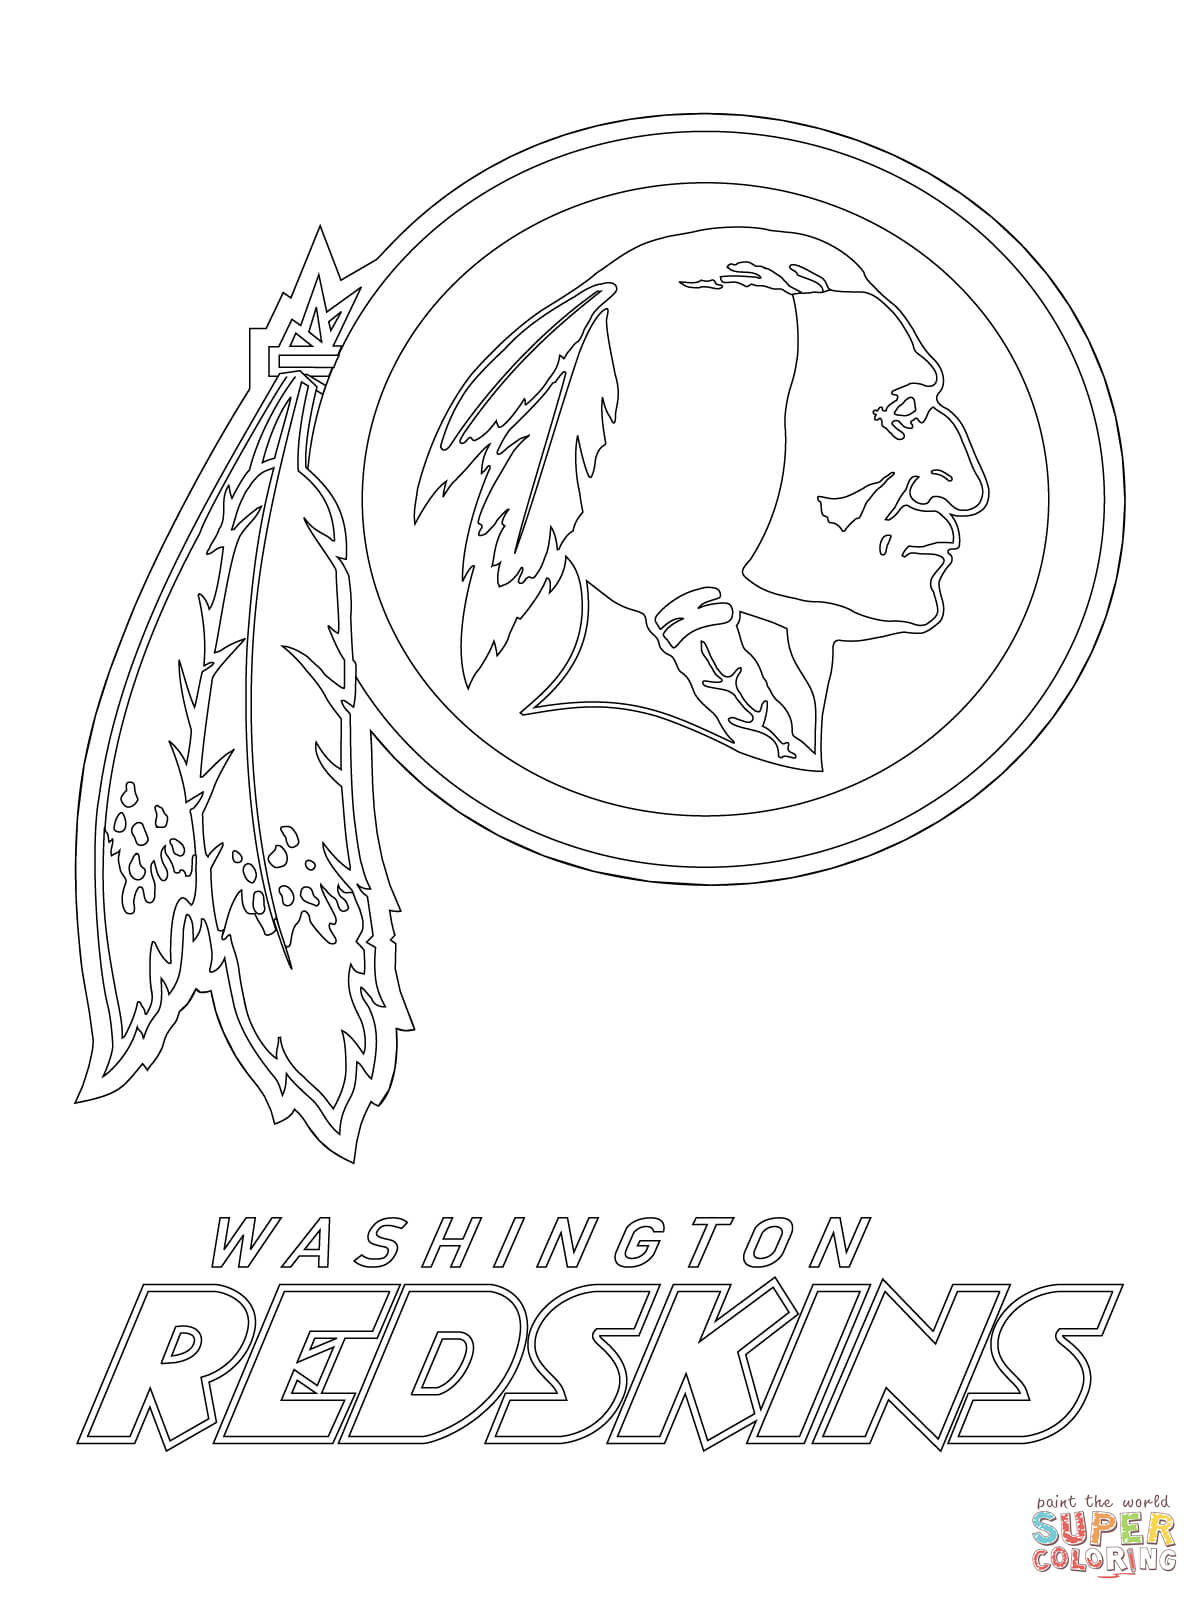 Washington Redskins Logo coloring page | Free Printable Coloring Pages